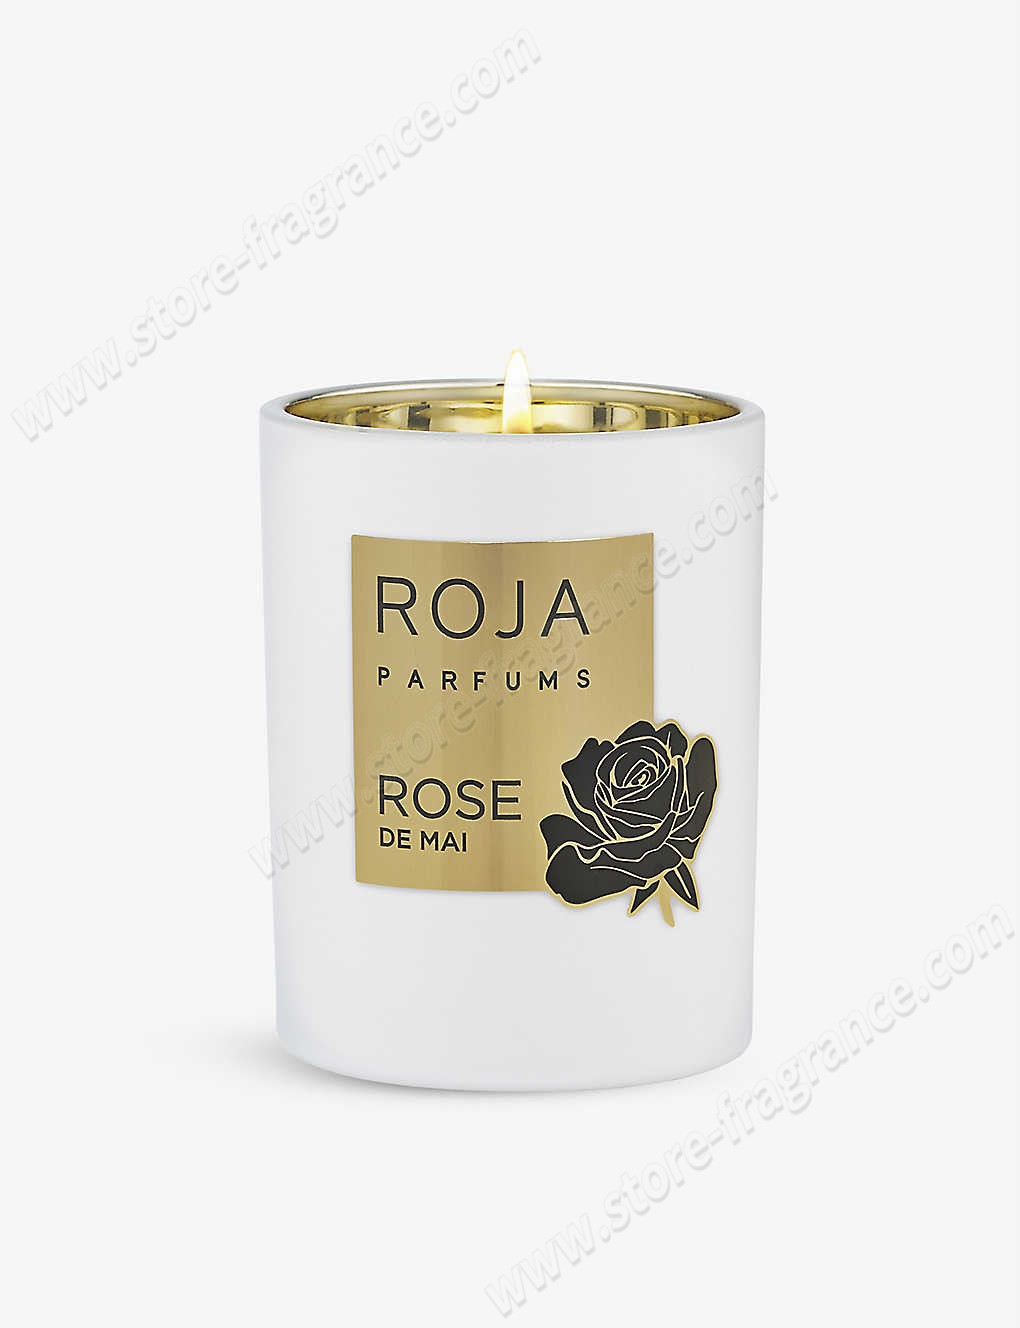 ROJA PARFUMS/Rose De Mai scented candle 300g ✿ Discount Store - ROJA PARFUMS/Rose De Mai scented candle 300g ✿ Discount Store